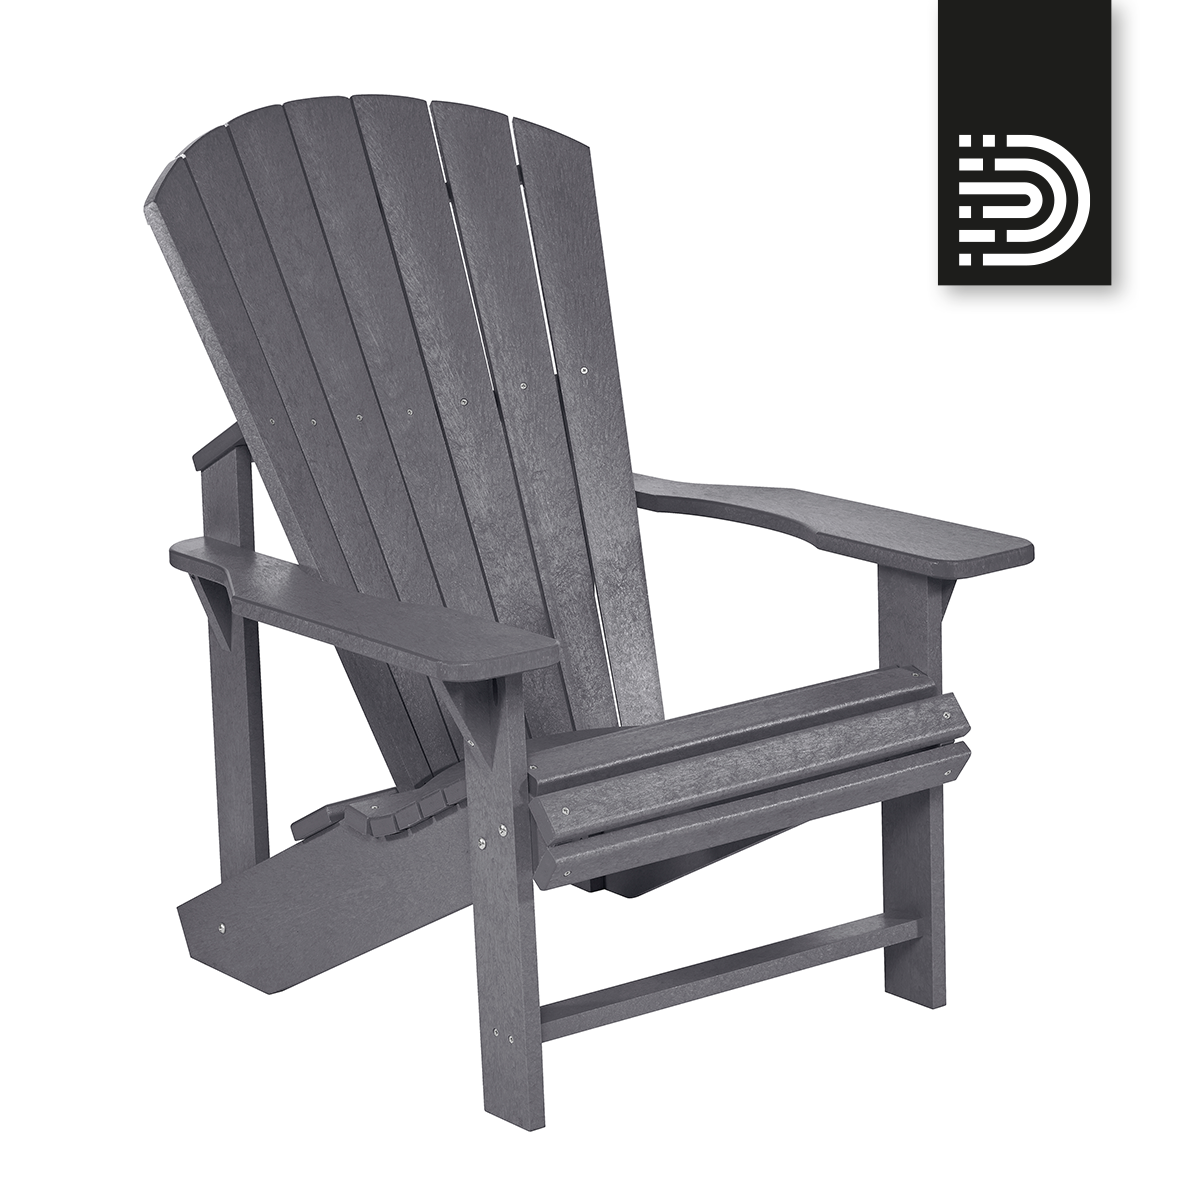  C01 Classic Adirondack Chair - slate grey 18